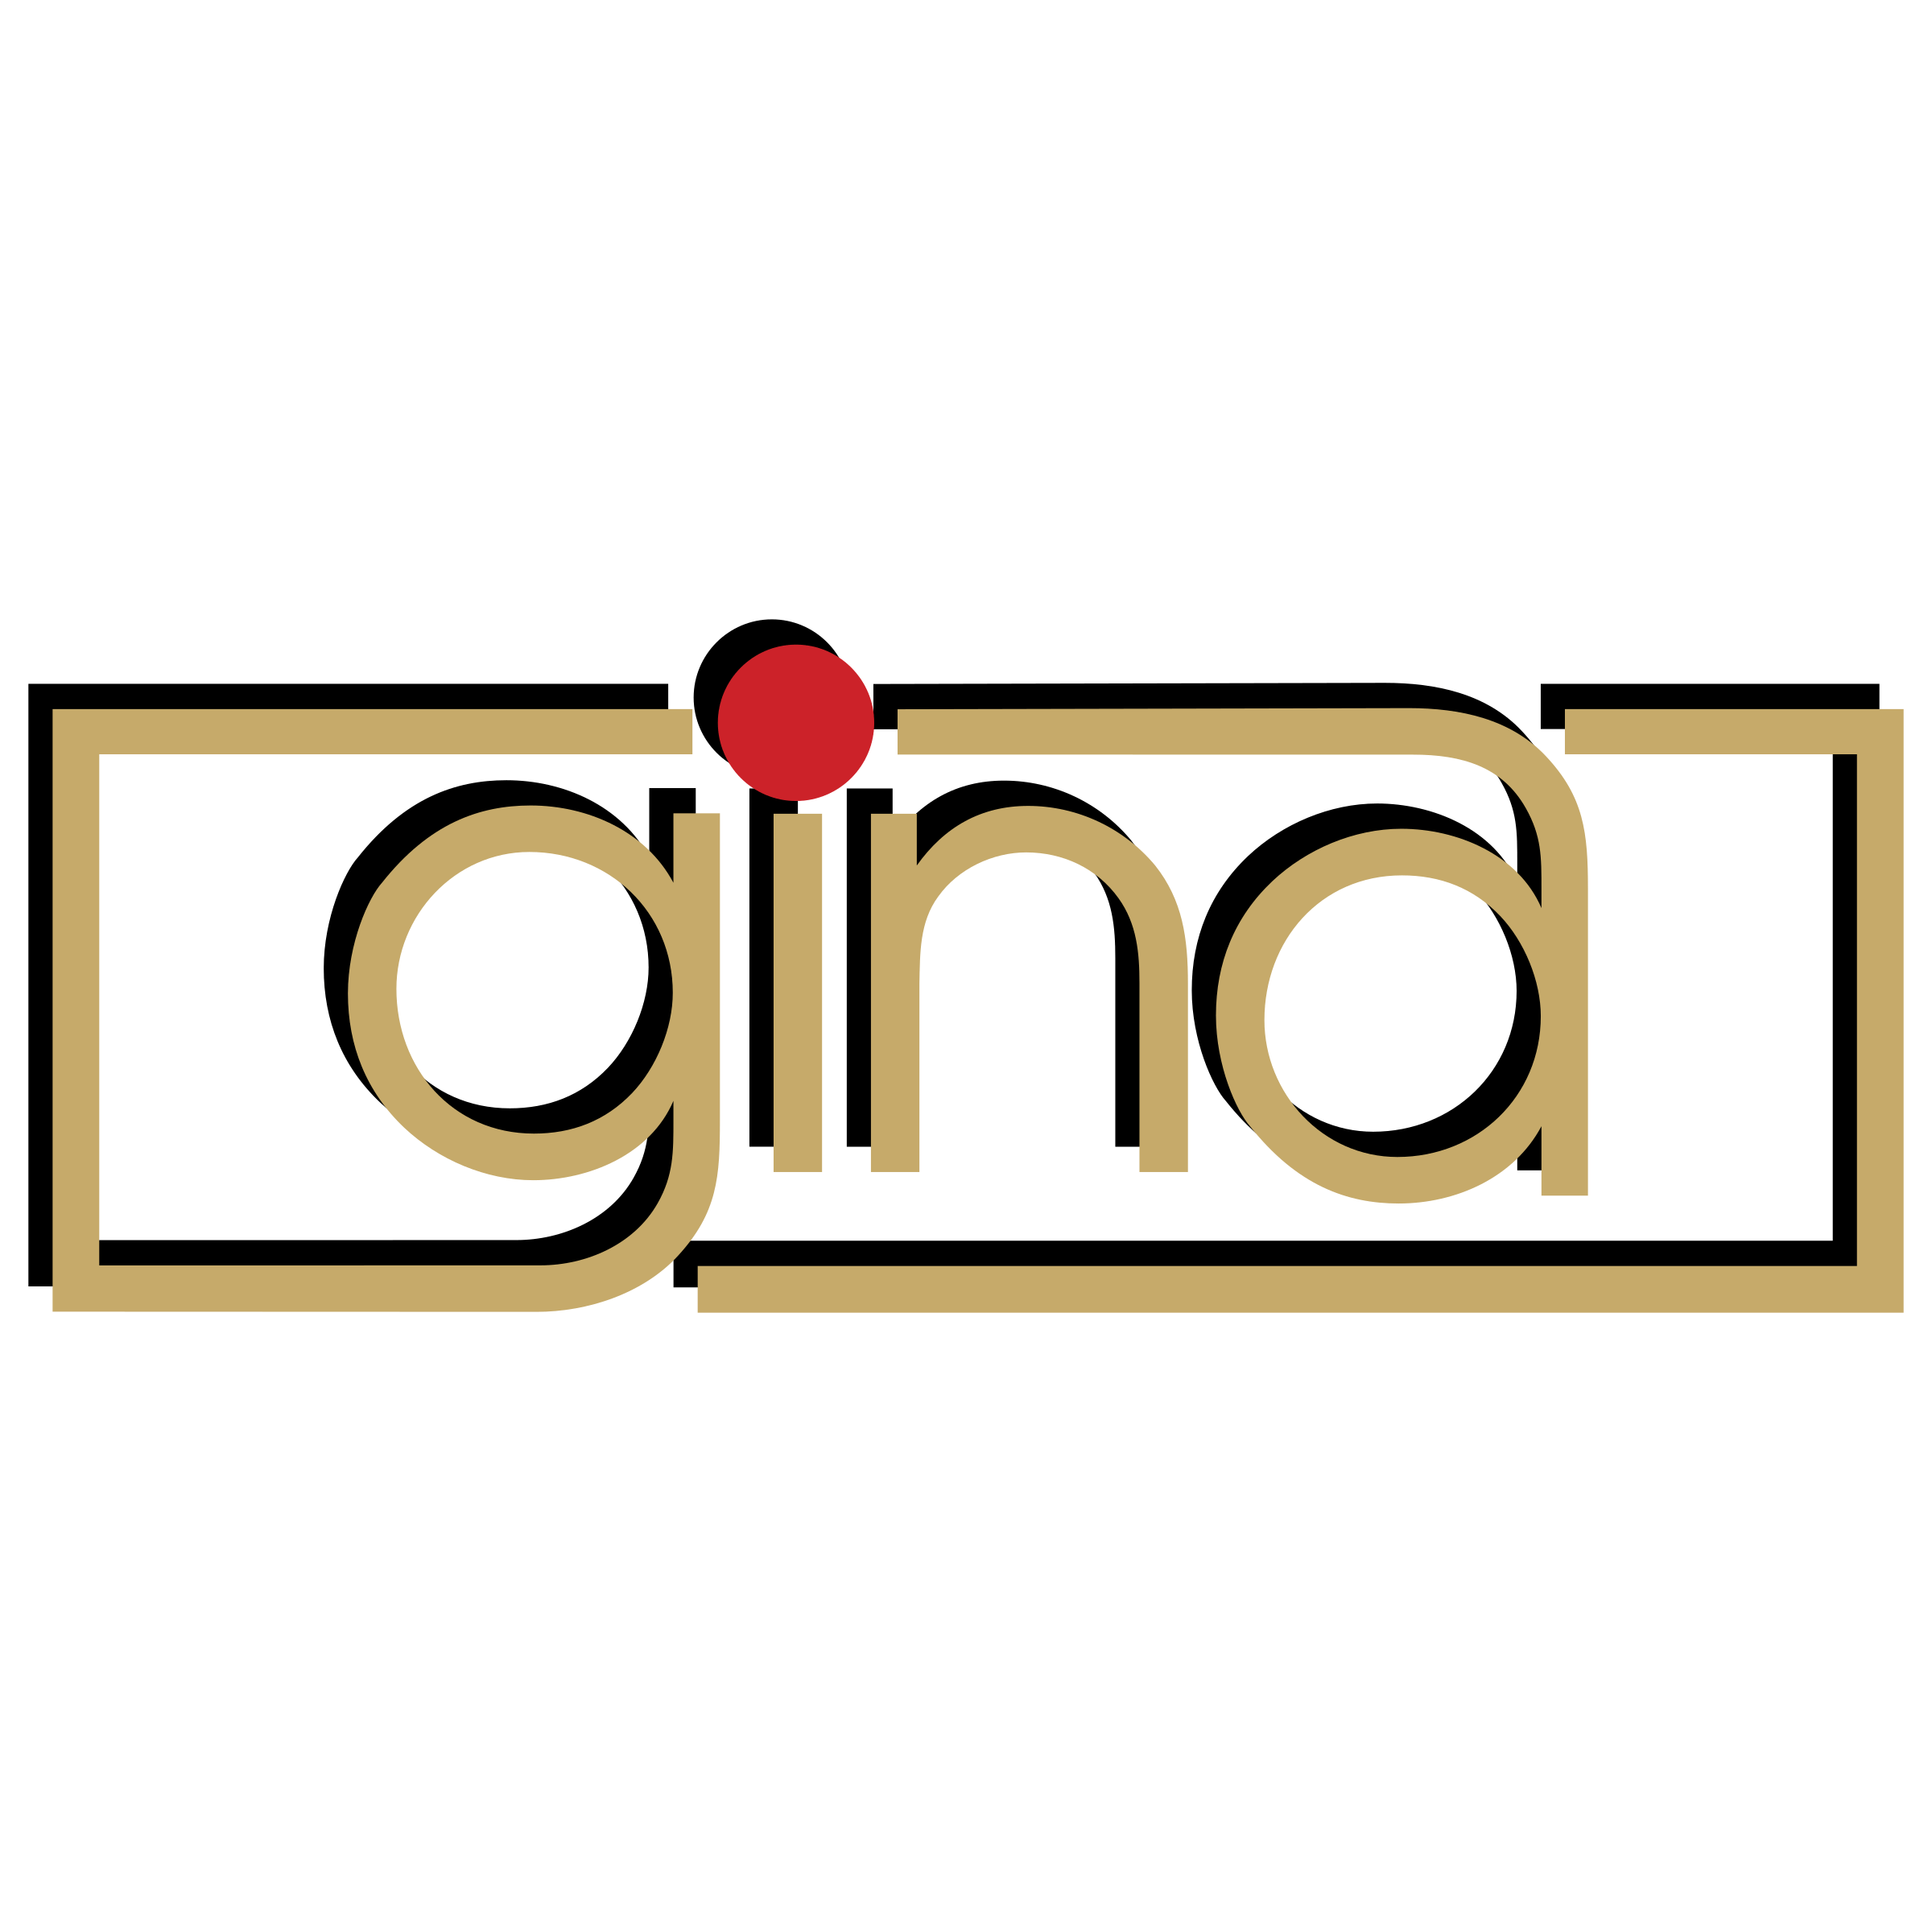 Gina Logo - Gina Logo PNG Transparent & SVG Vector - Freebie Supply